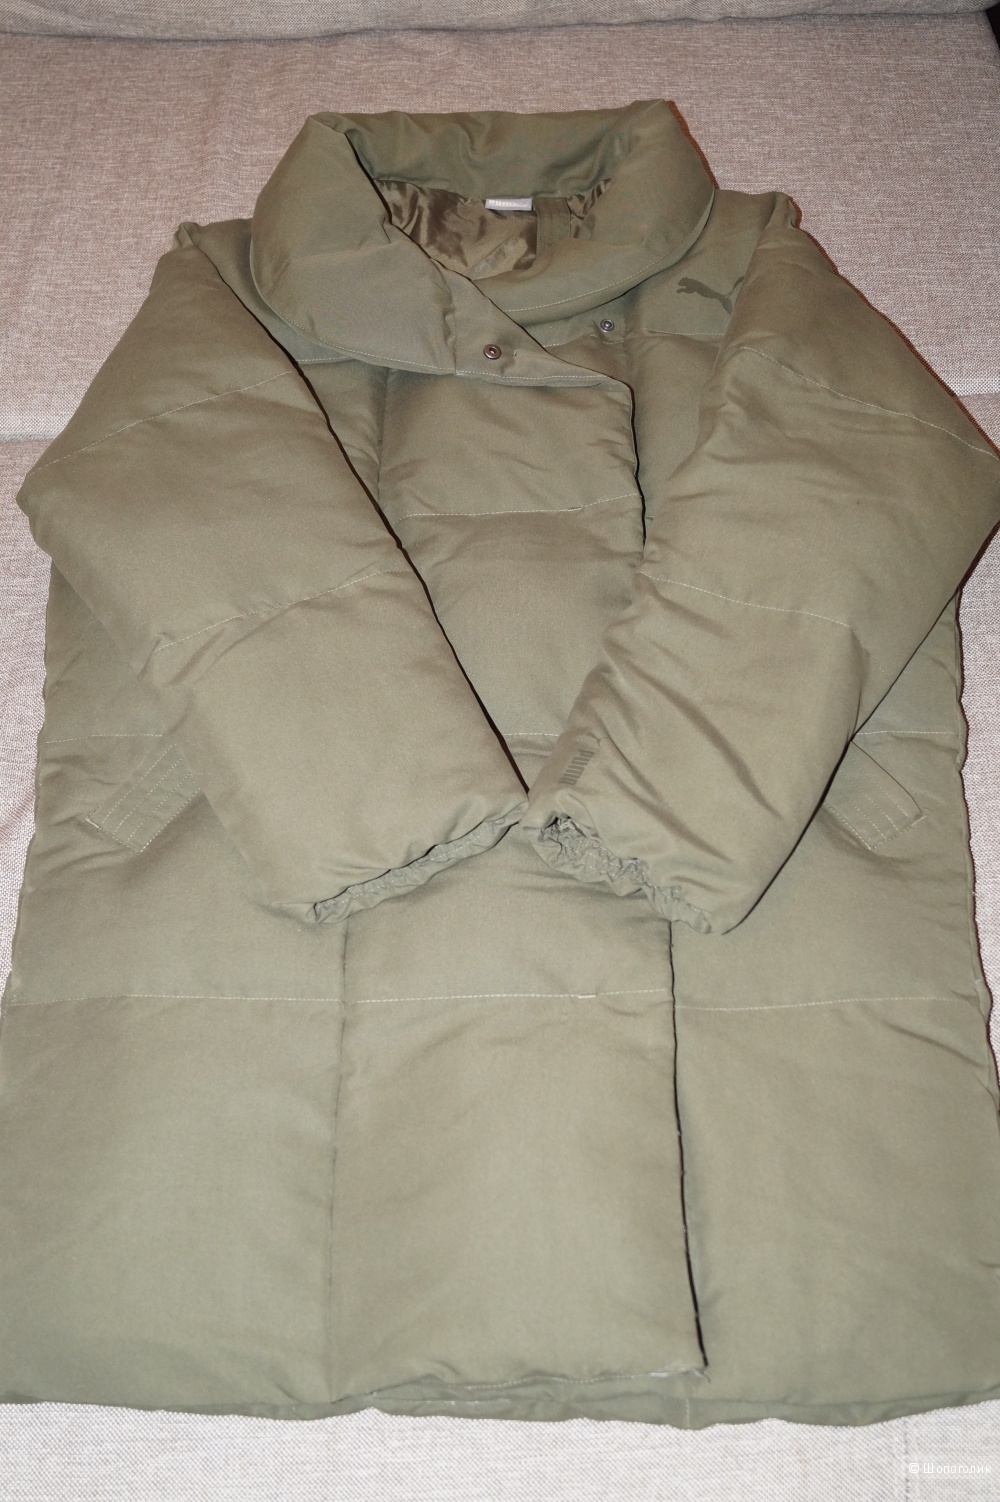 Куртка PUMA, размер 46-48